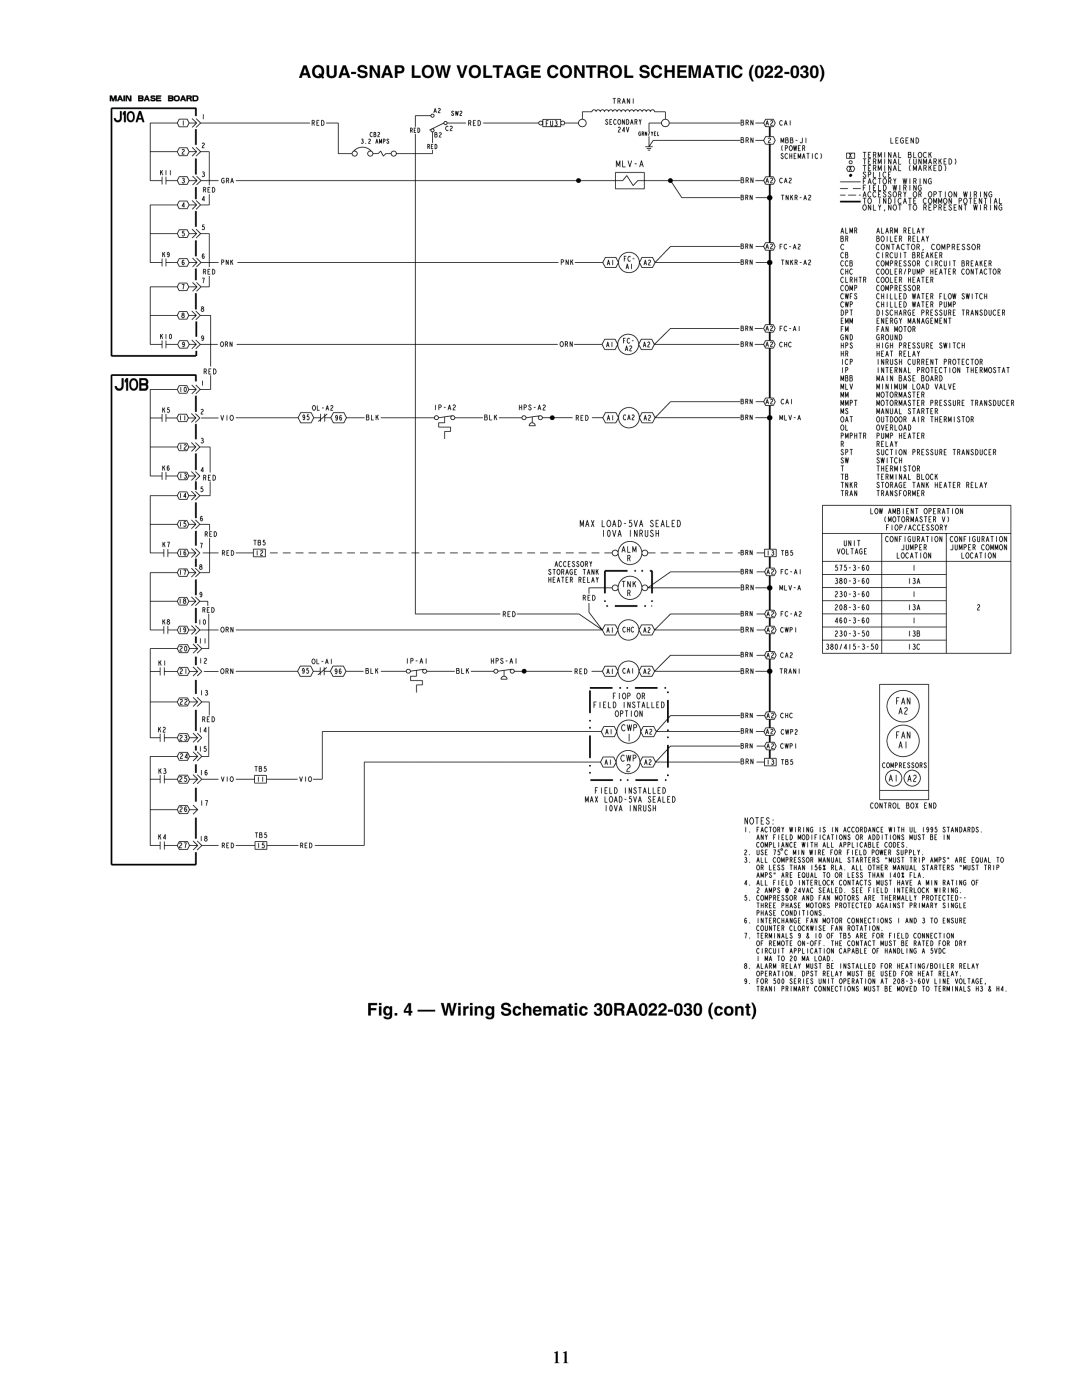 Sterling 30RA010-055 manual Wiring Schematic 30RA022-030cont, Aqua-Snaplow Voltage Control Schematic 